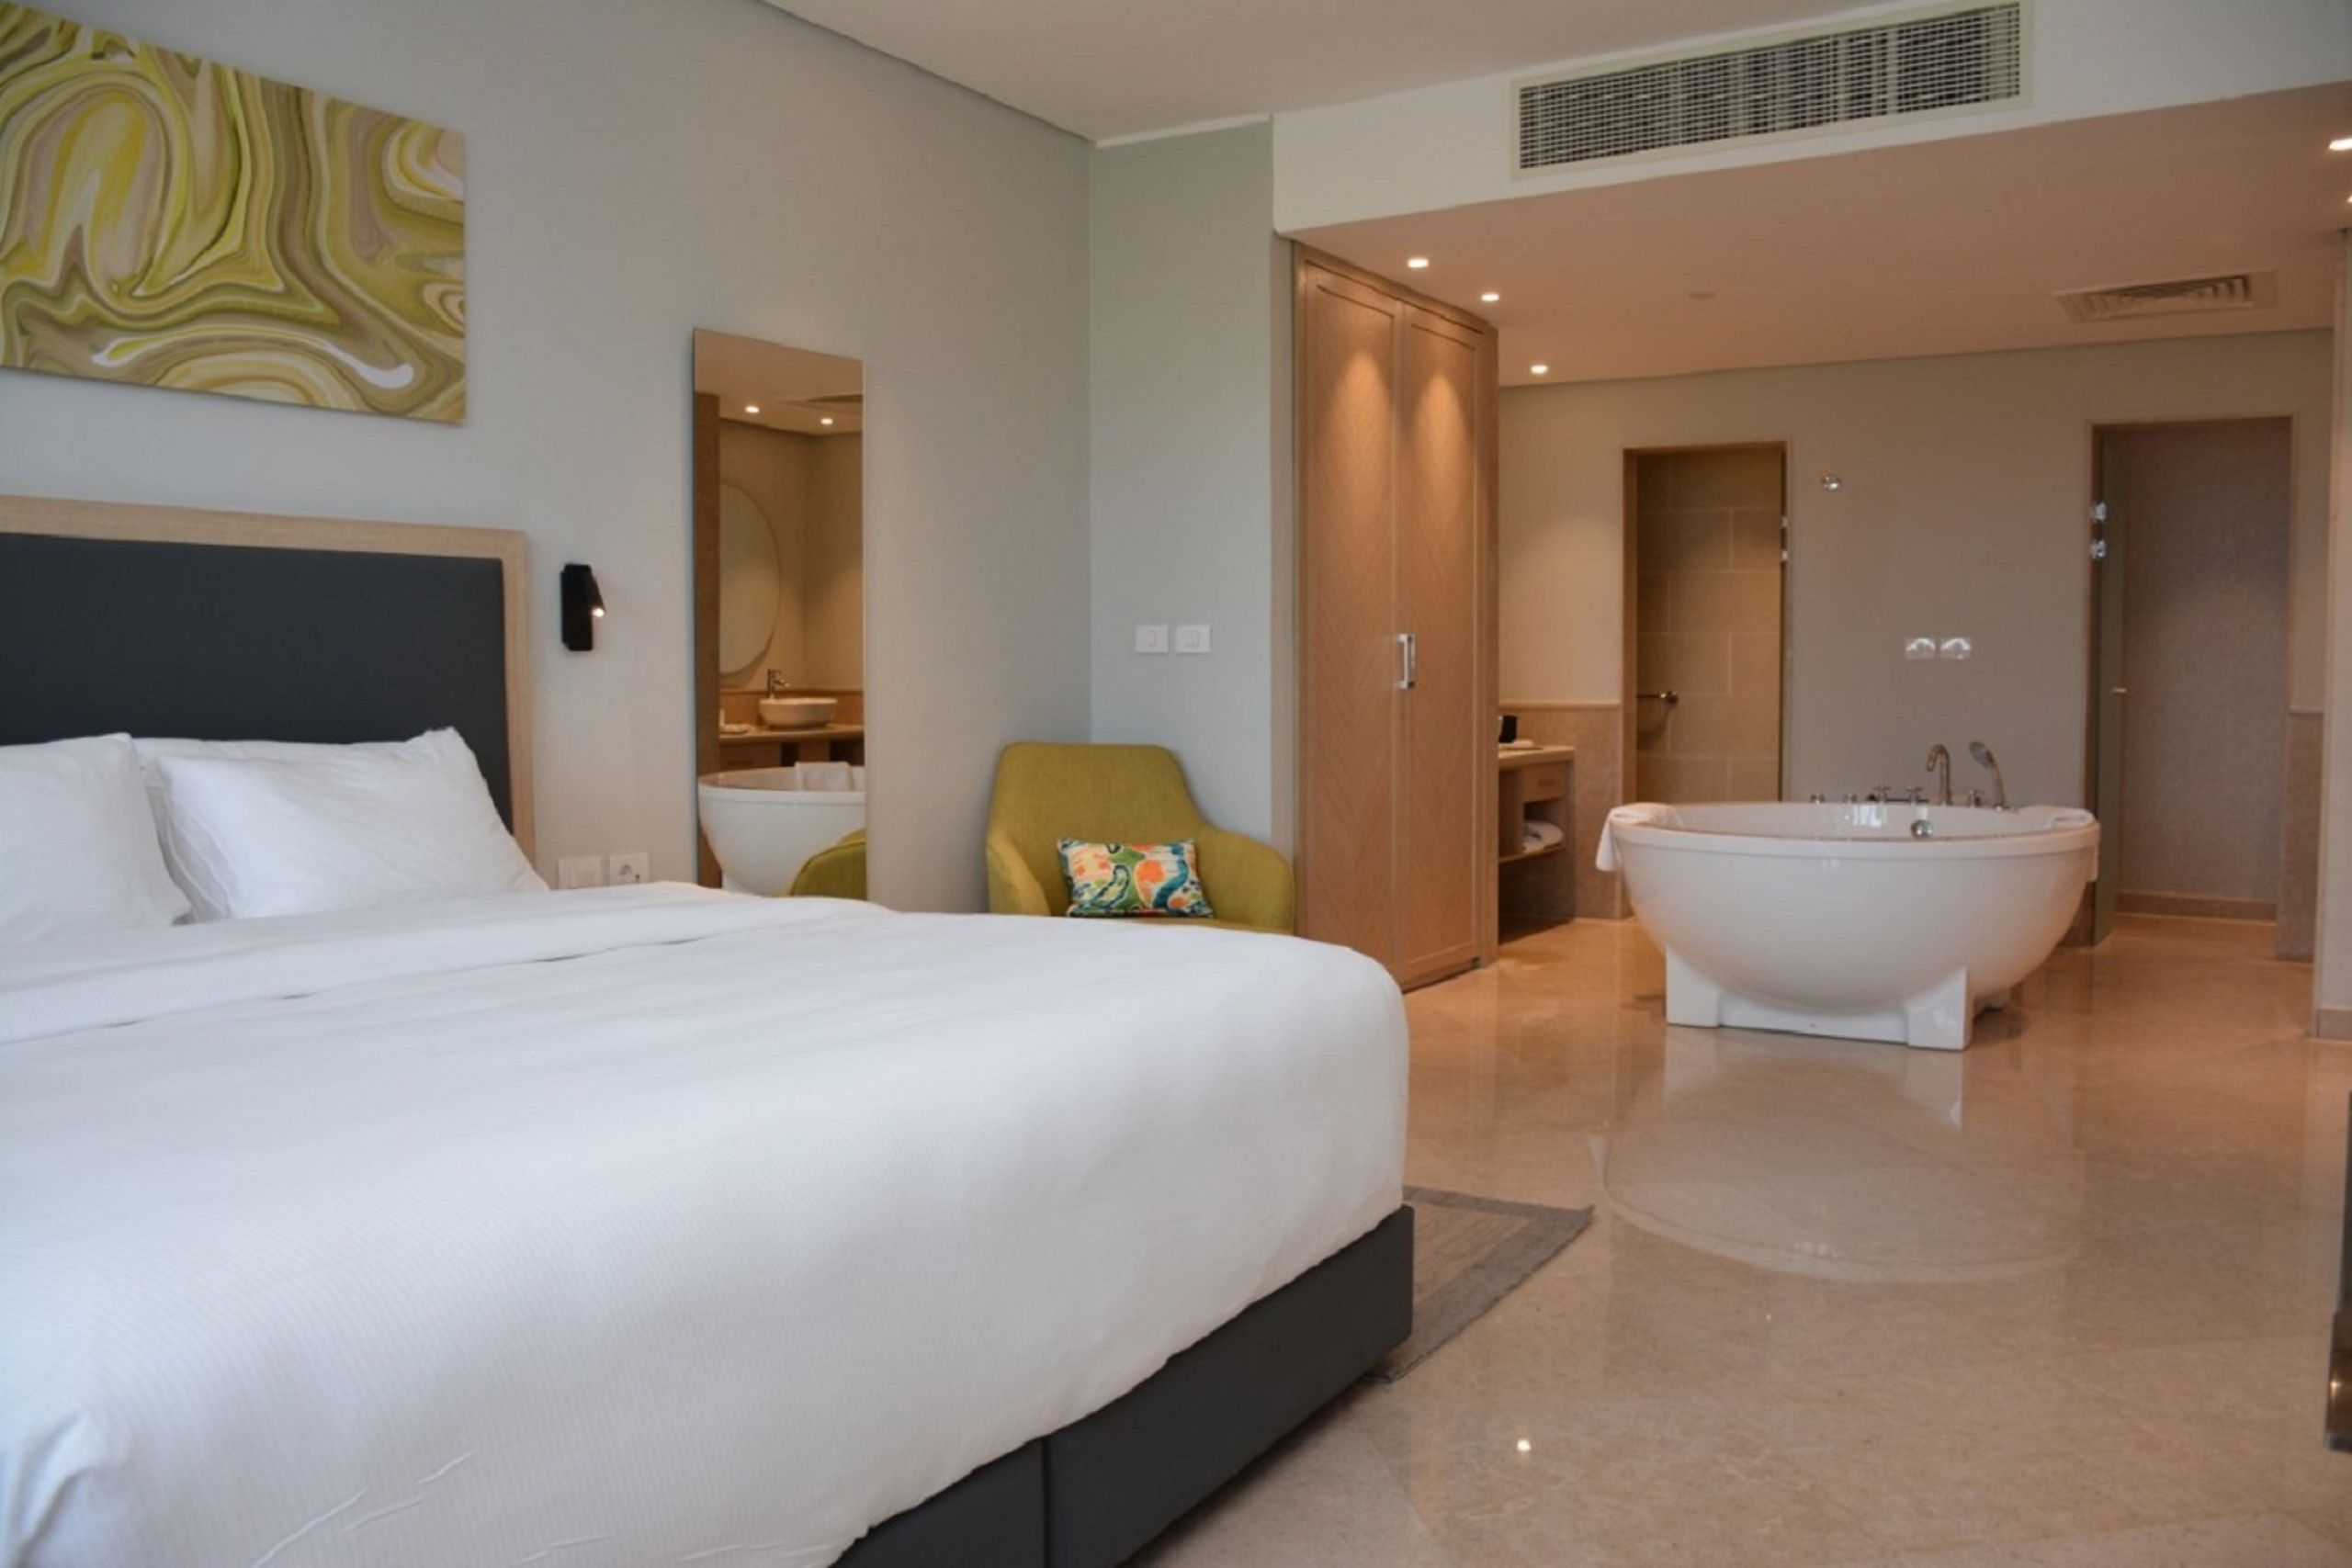 Steigenberger Aldau Beach Hotel - Hurghada - Egypte - De Suite - bed en badkamer